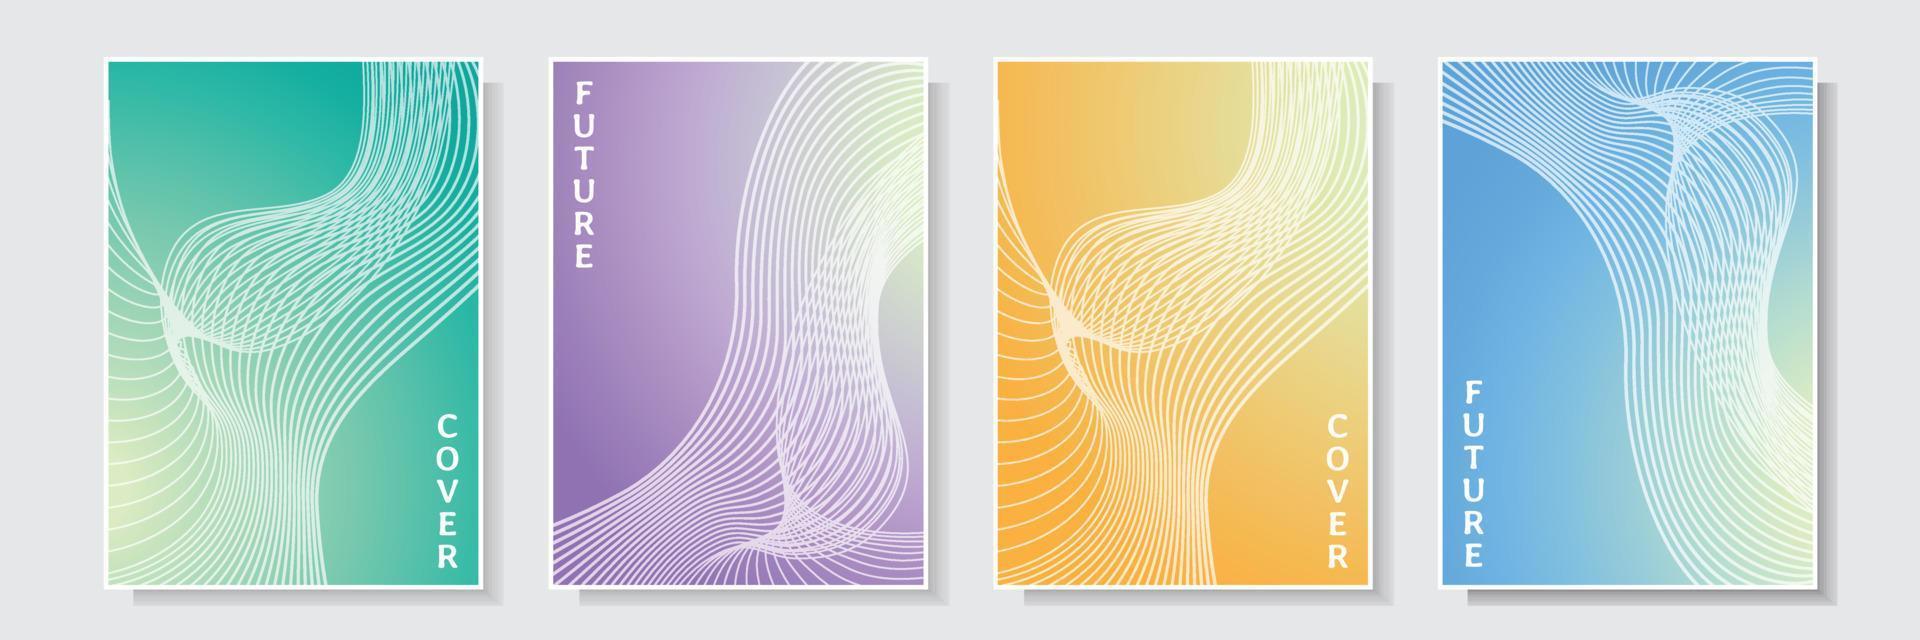 moderne golvende gestreepte gradatie stijl cover art design set collectie kleurrijke achtergrond vector